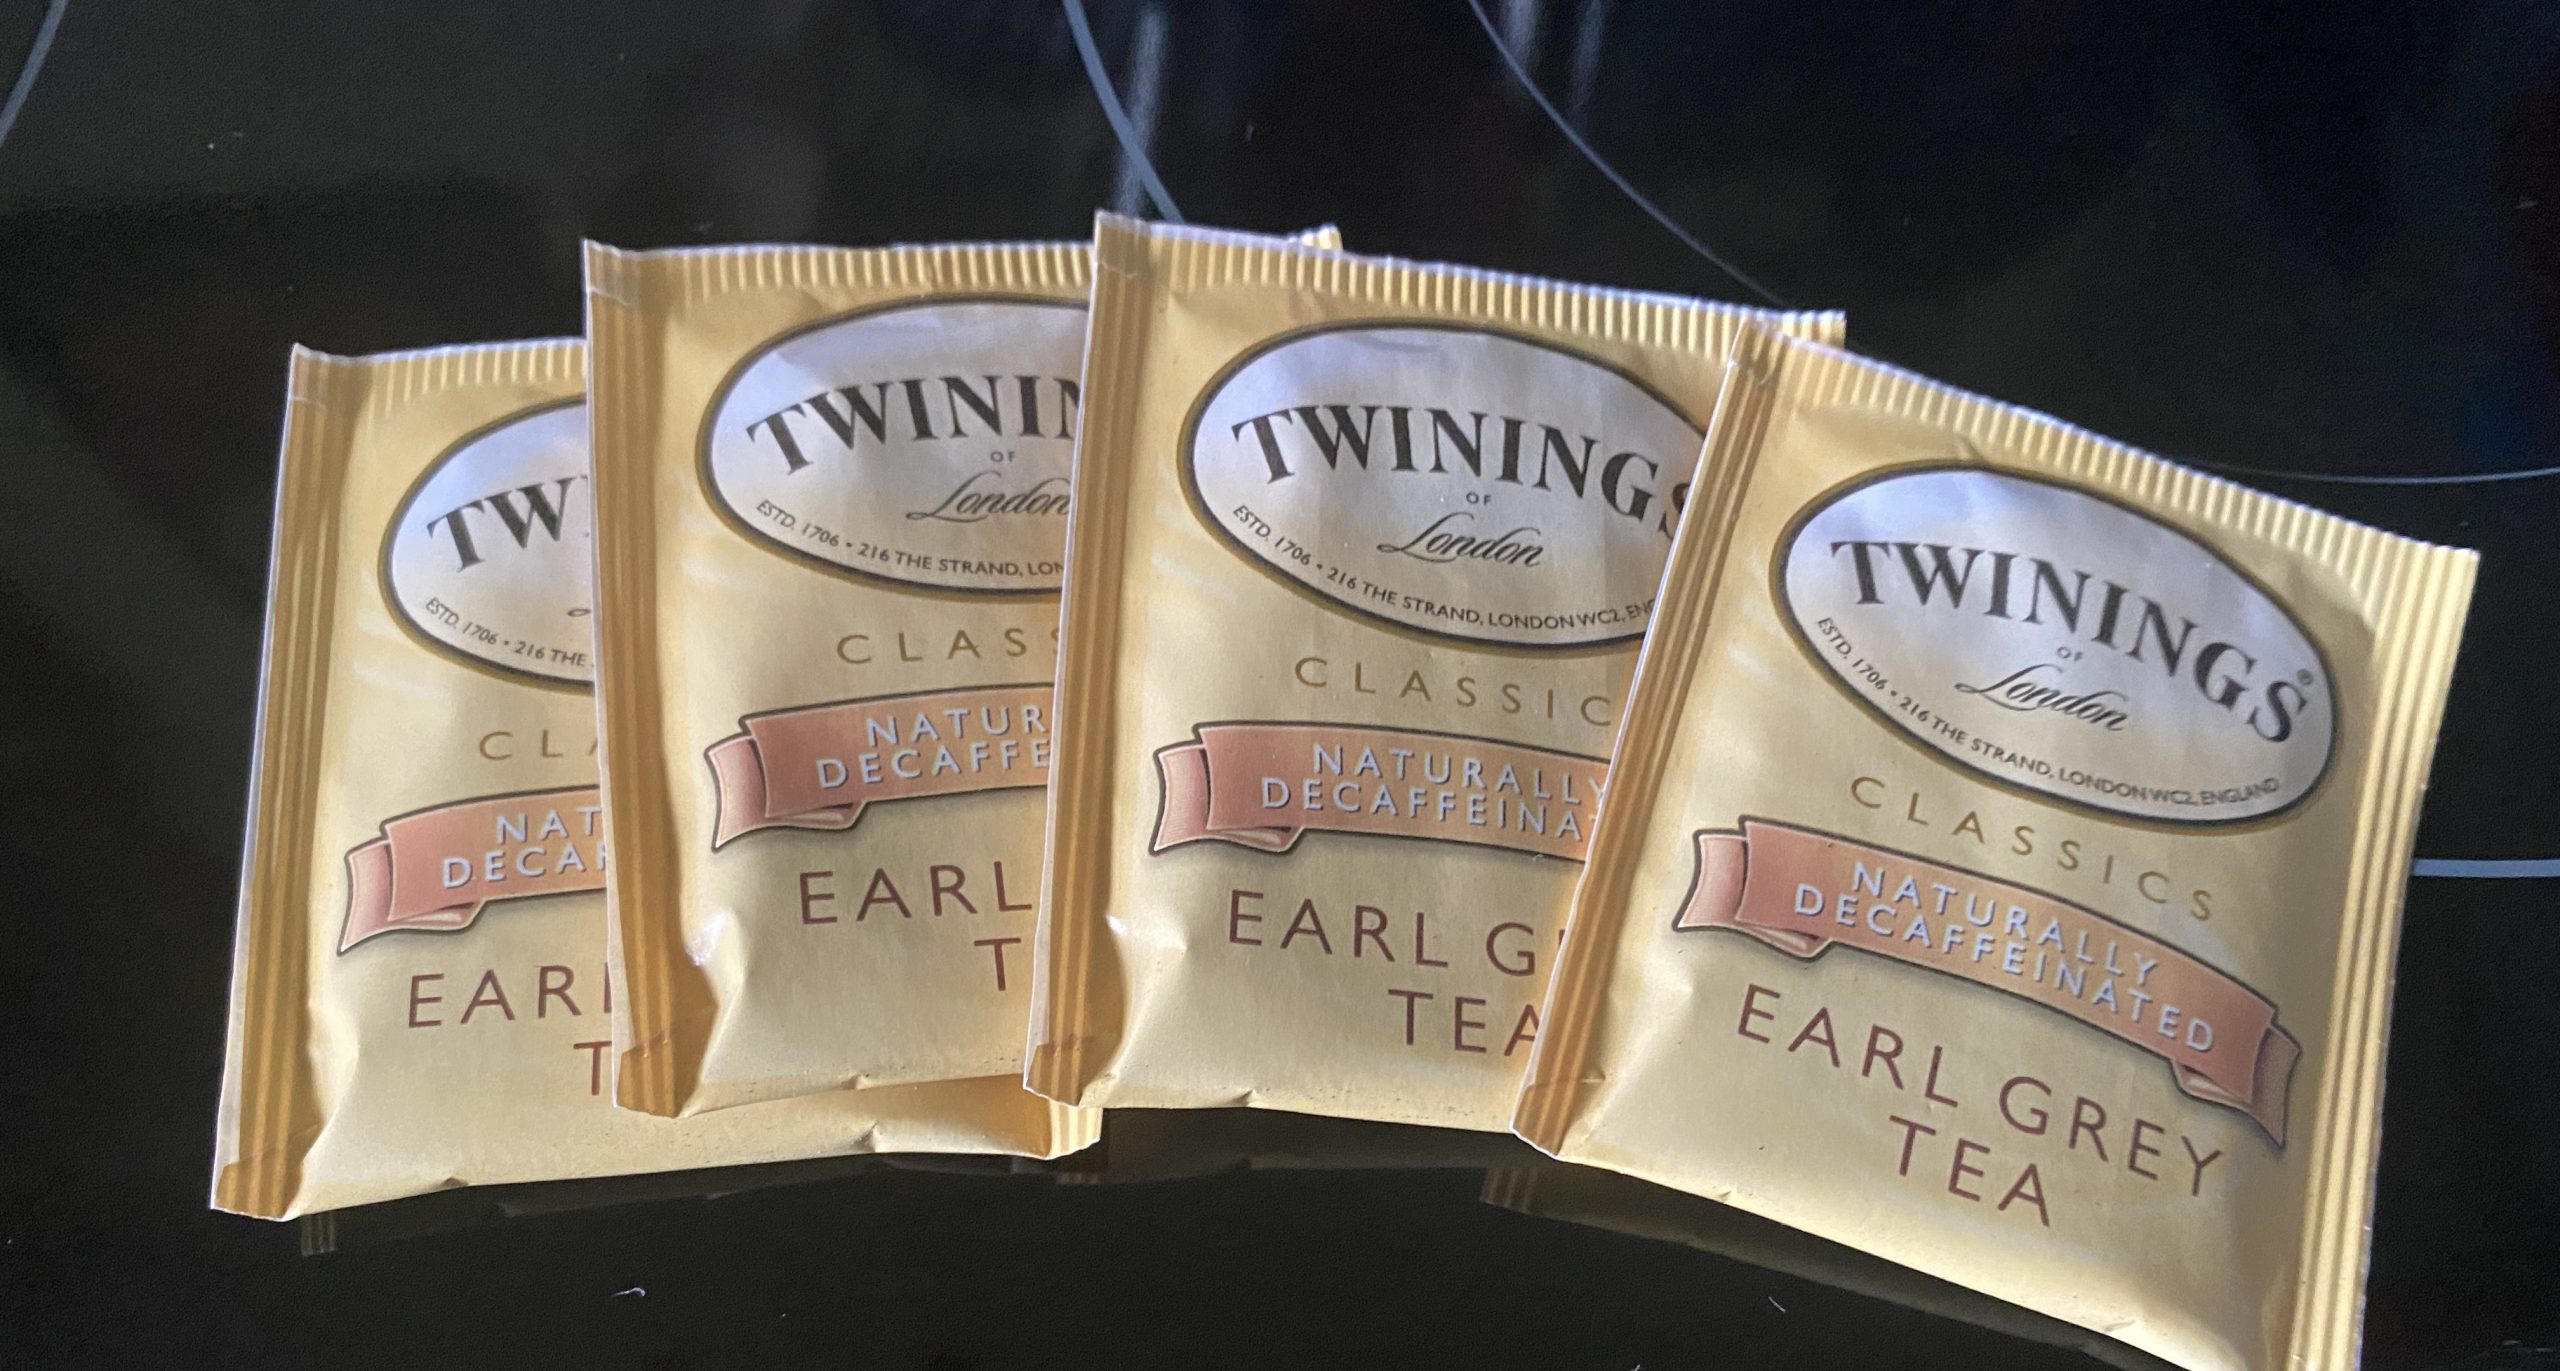 Four packets of Twinnings decaf Earl Grey Tea